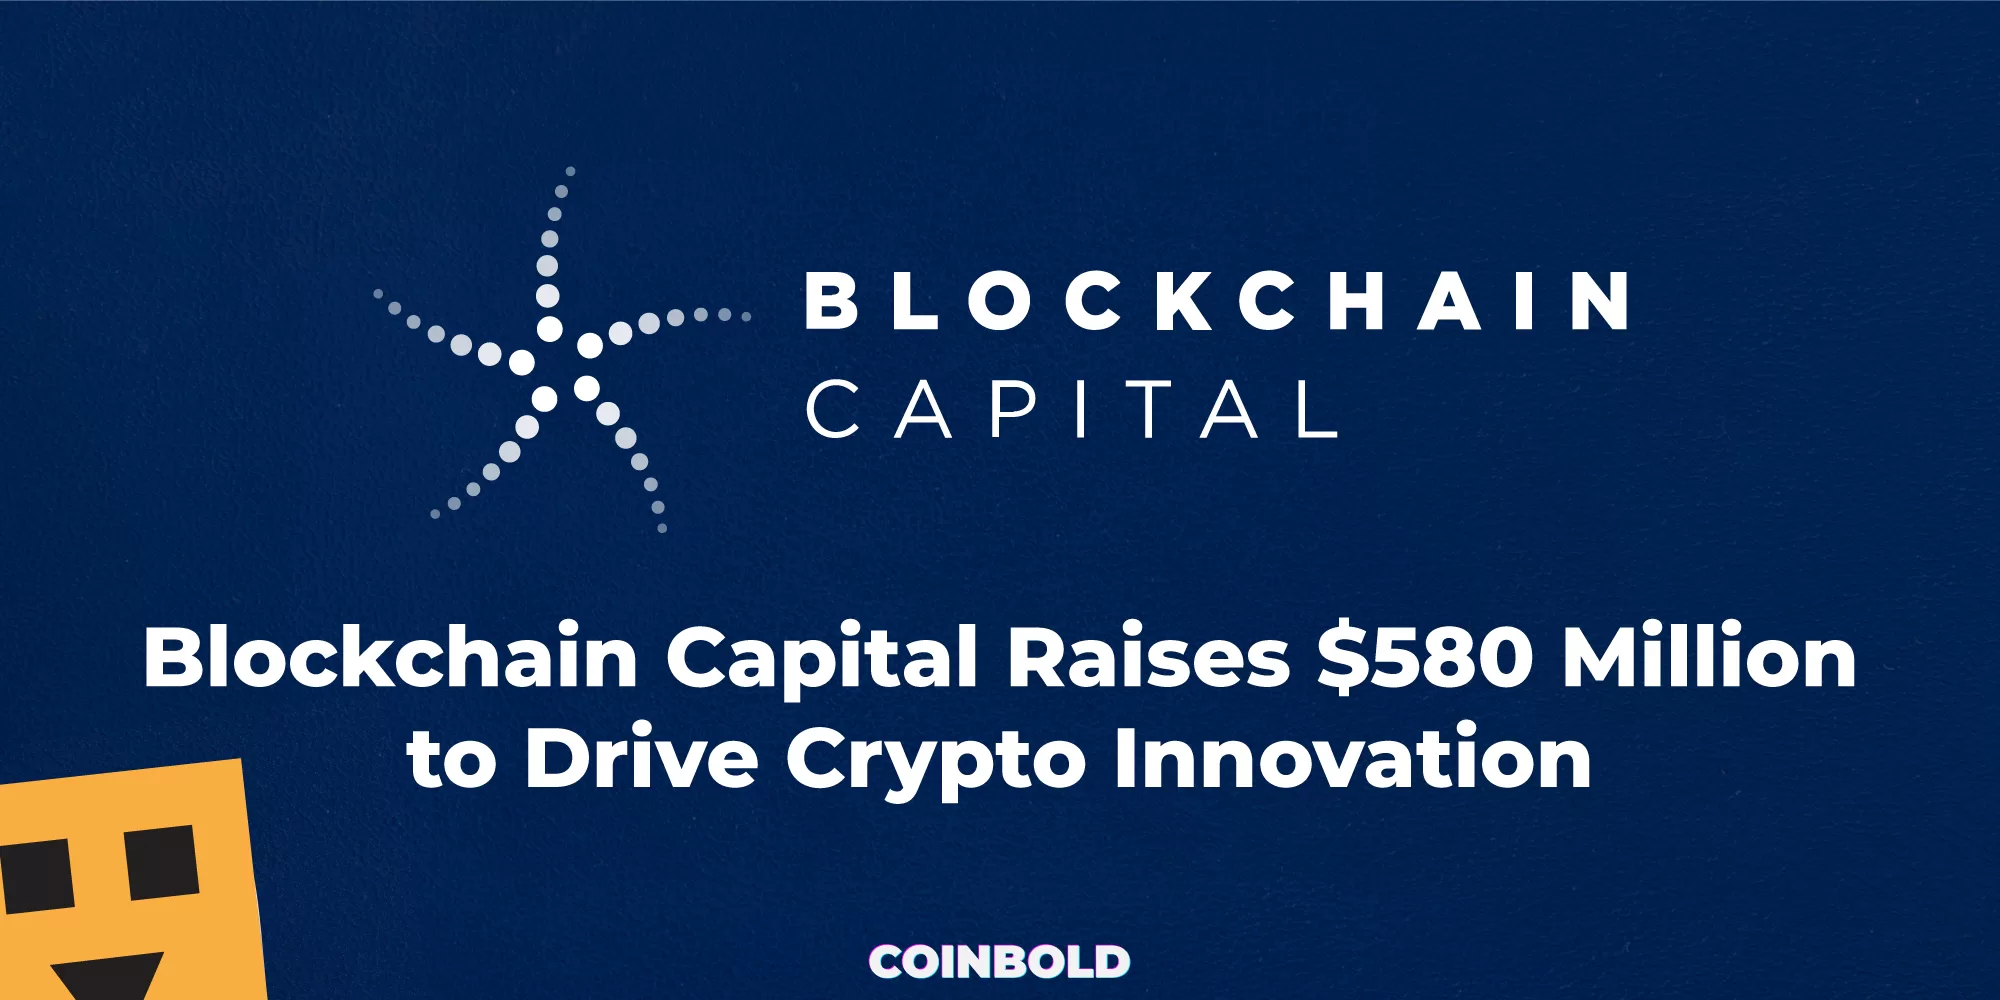 Blockchain Capital Raises $580 Million to Drive Crypto Innovation